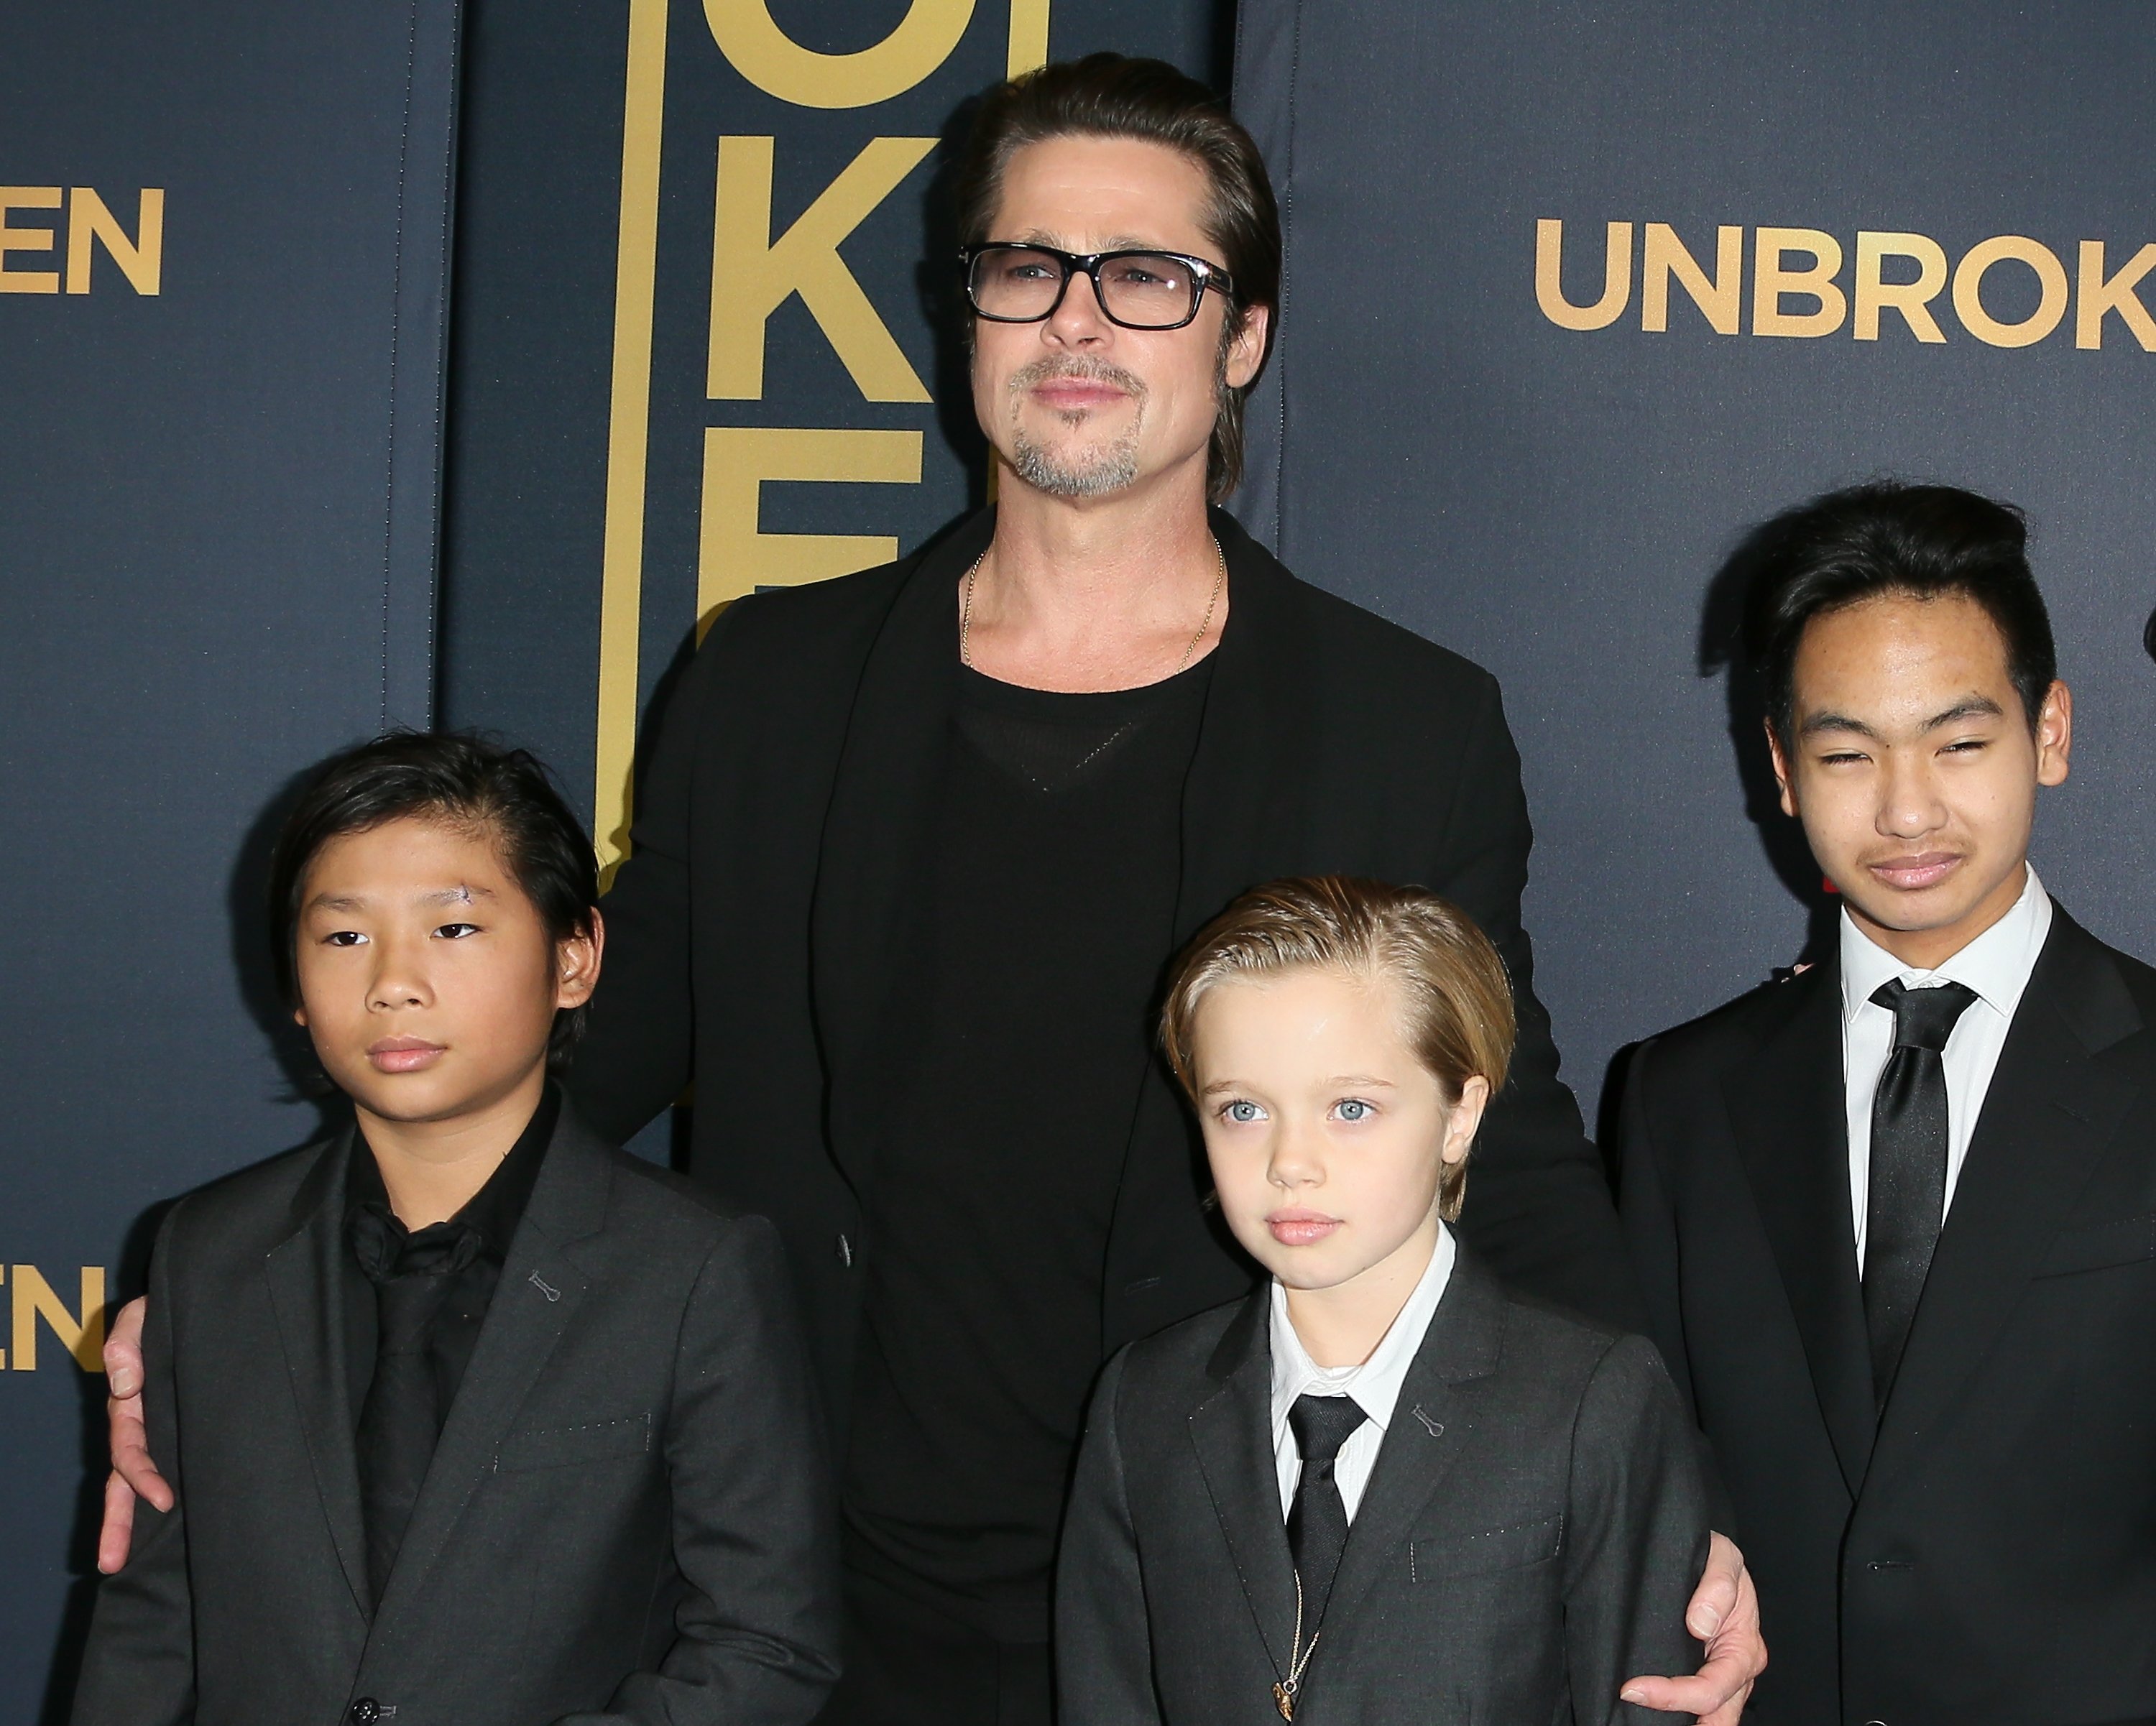 Brad Pitt, Pax Thien Jolie-Pitt, Shiloh Nouvel Jolie-Pitt und Maddox Jolie-Pitt während der "Unbroken" Los Angeles Premiere im TCL Chinese Theatre IMAX am 15. Dezember 2014 in Hollywood, Kalifornien. | Quelle: Getty Images